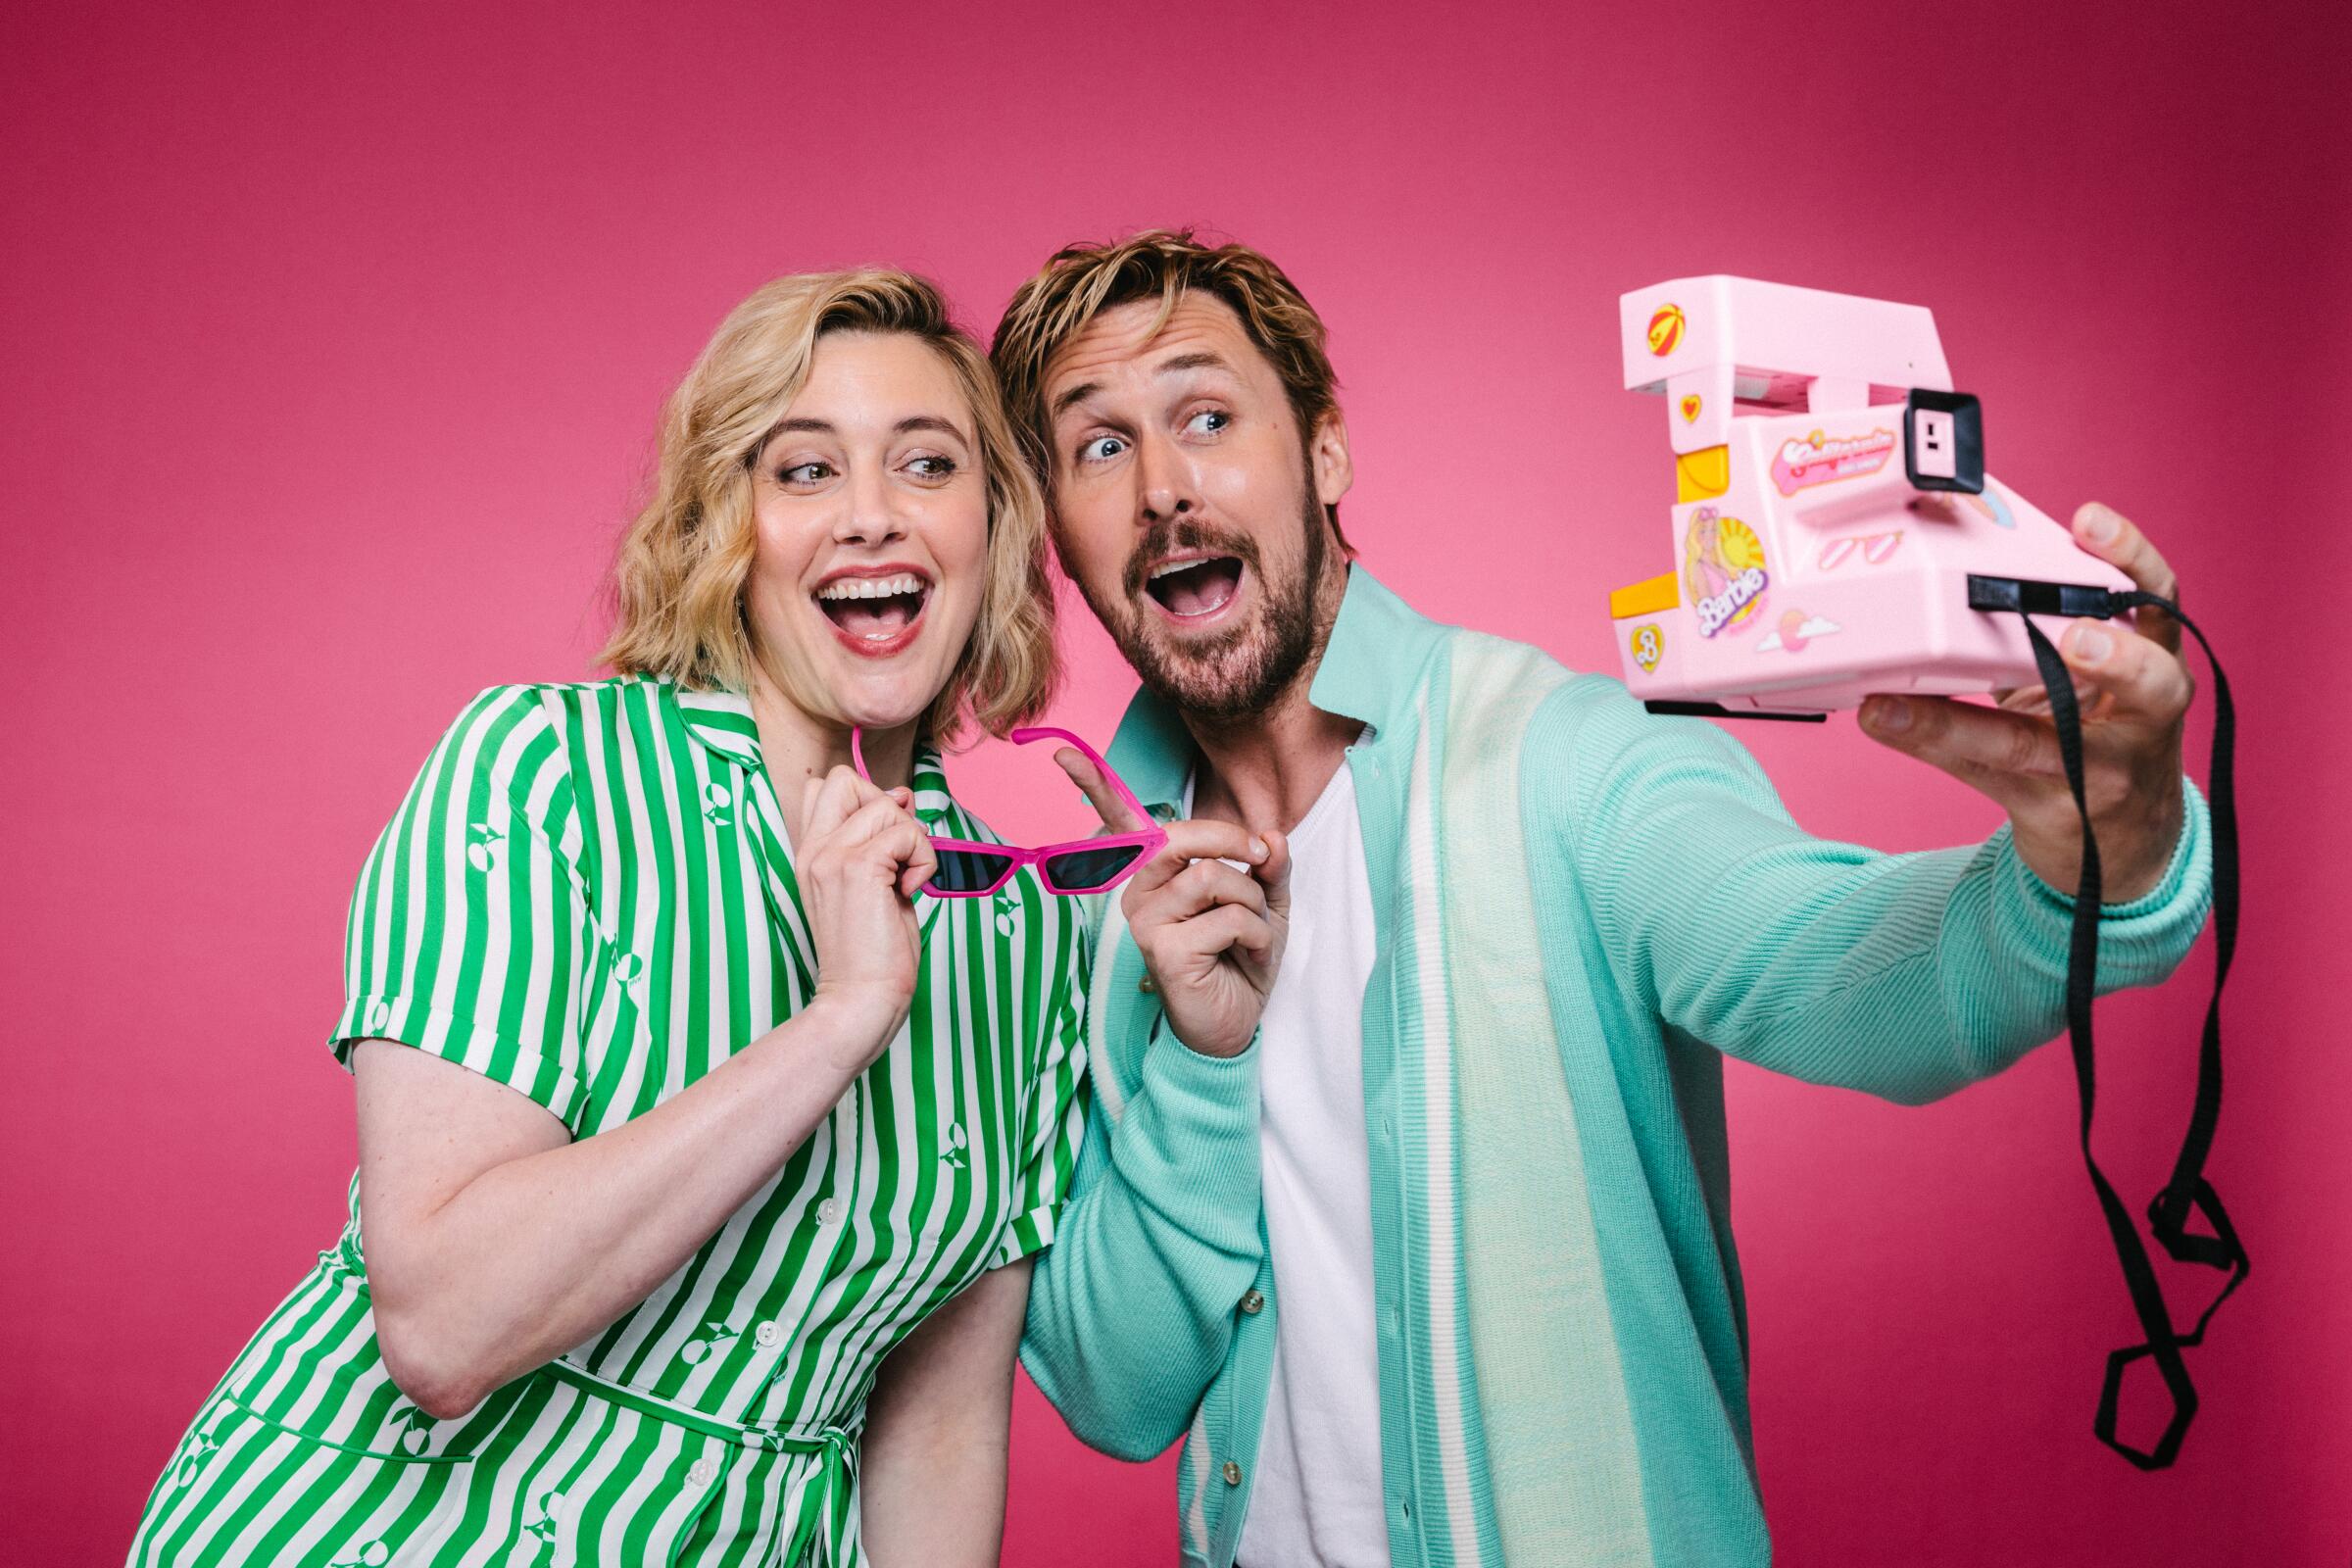 "Barbie" filmmaker Greta Gerwig and her Ken, Ryan Gosling, playfully pose for a pink Polaroid camera.